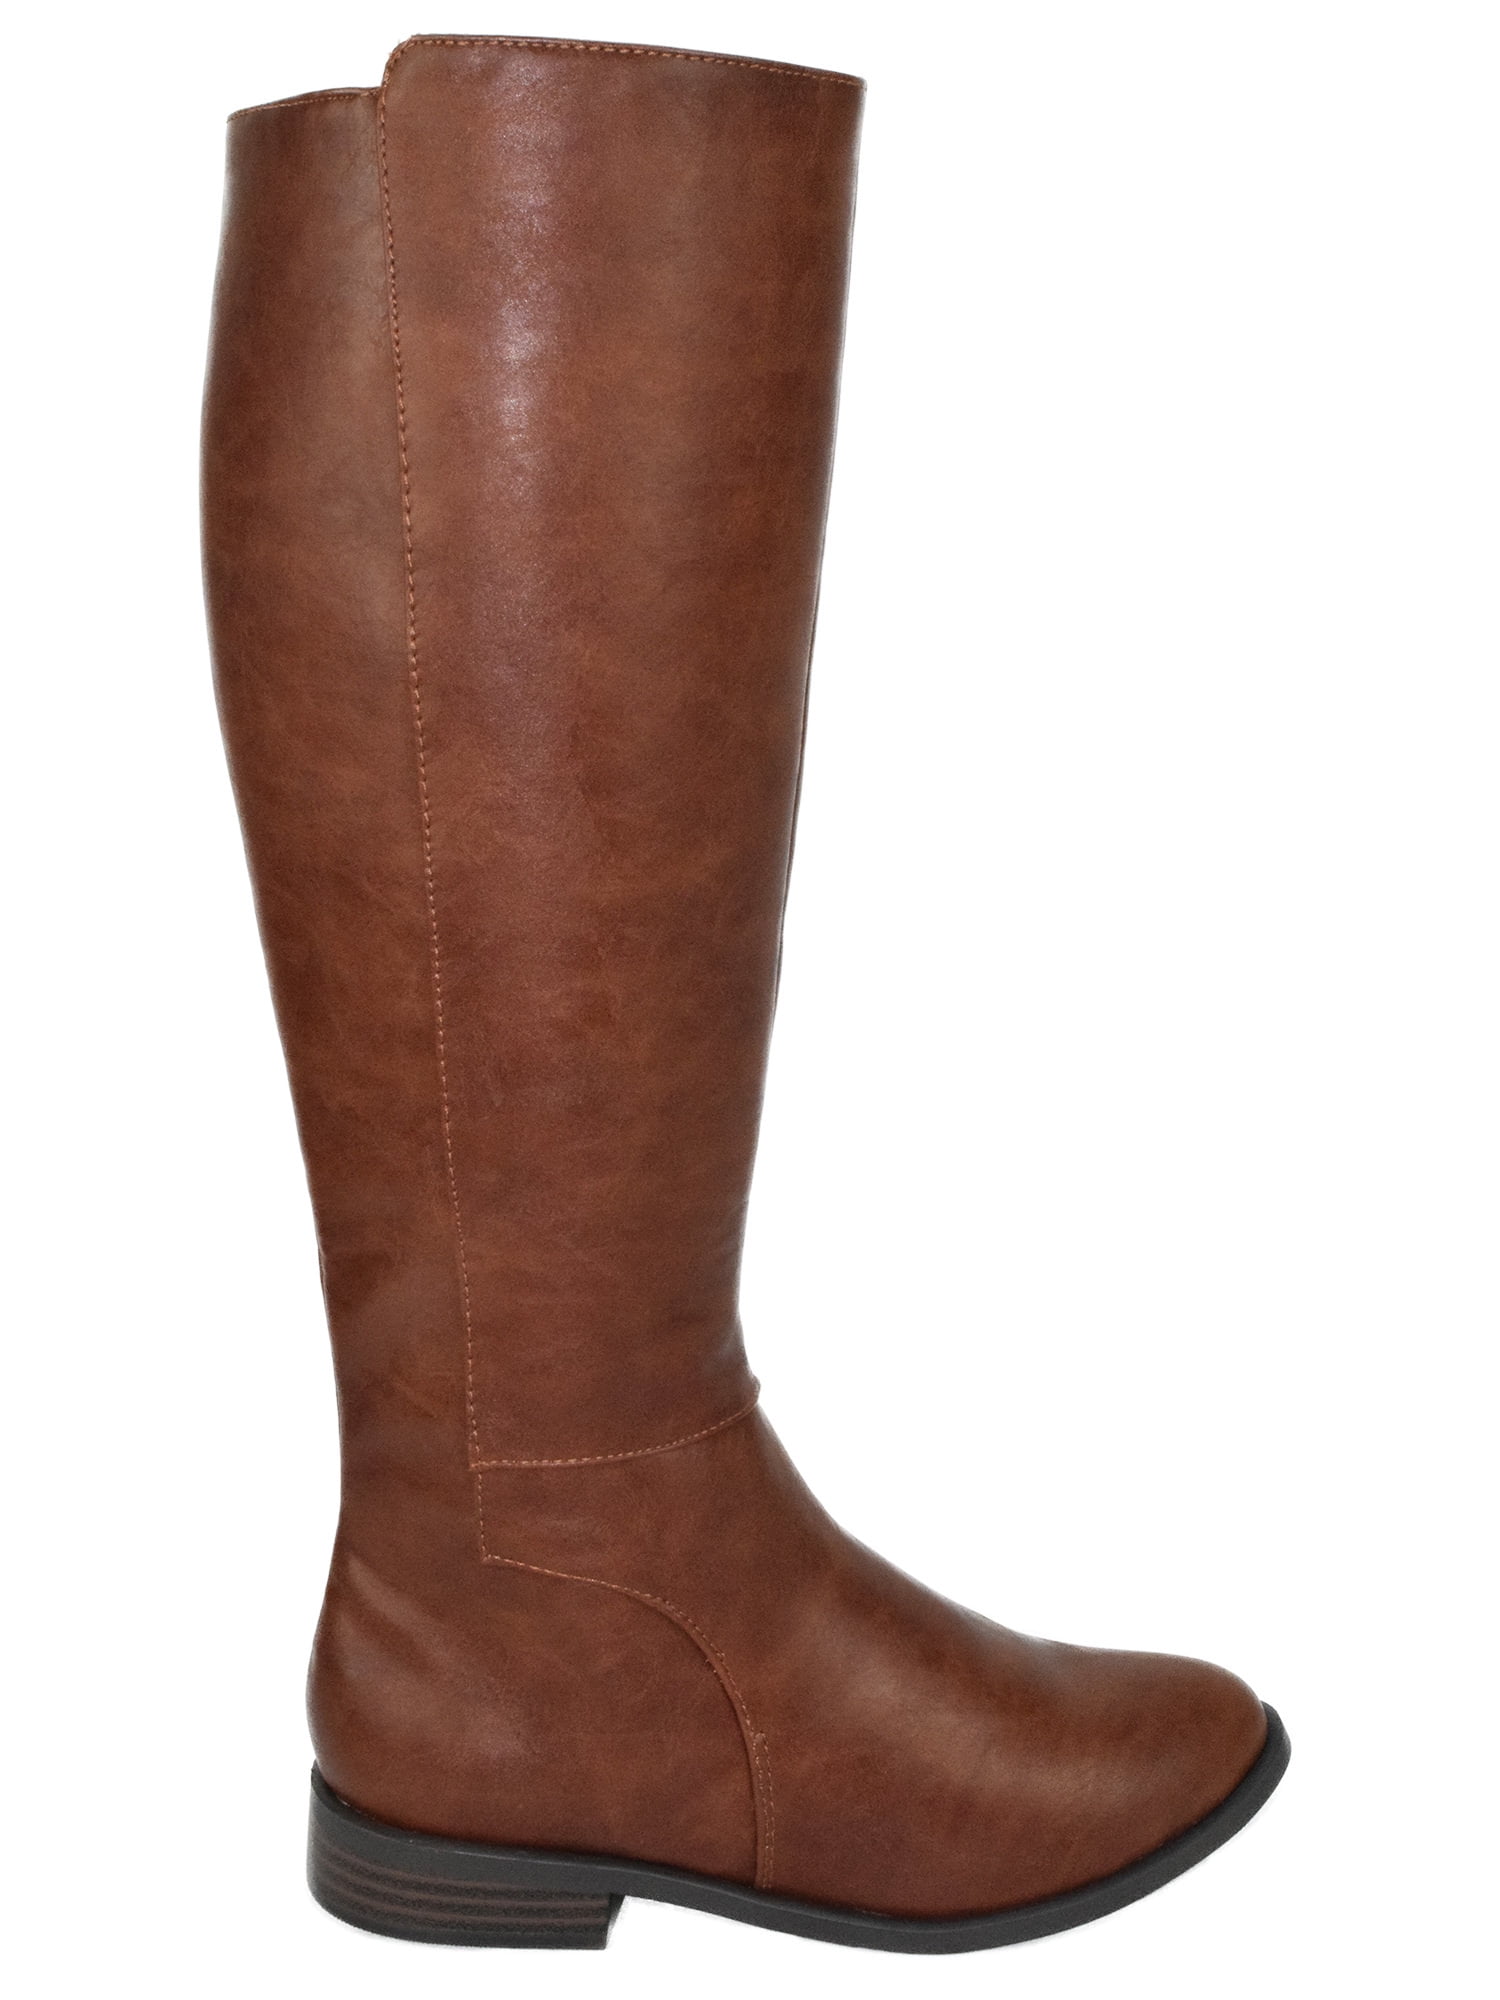 City Classified - Kauri Tan Brown City Classified Women Flat Basic Riding Boots Side Zipper Knee High 7.5